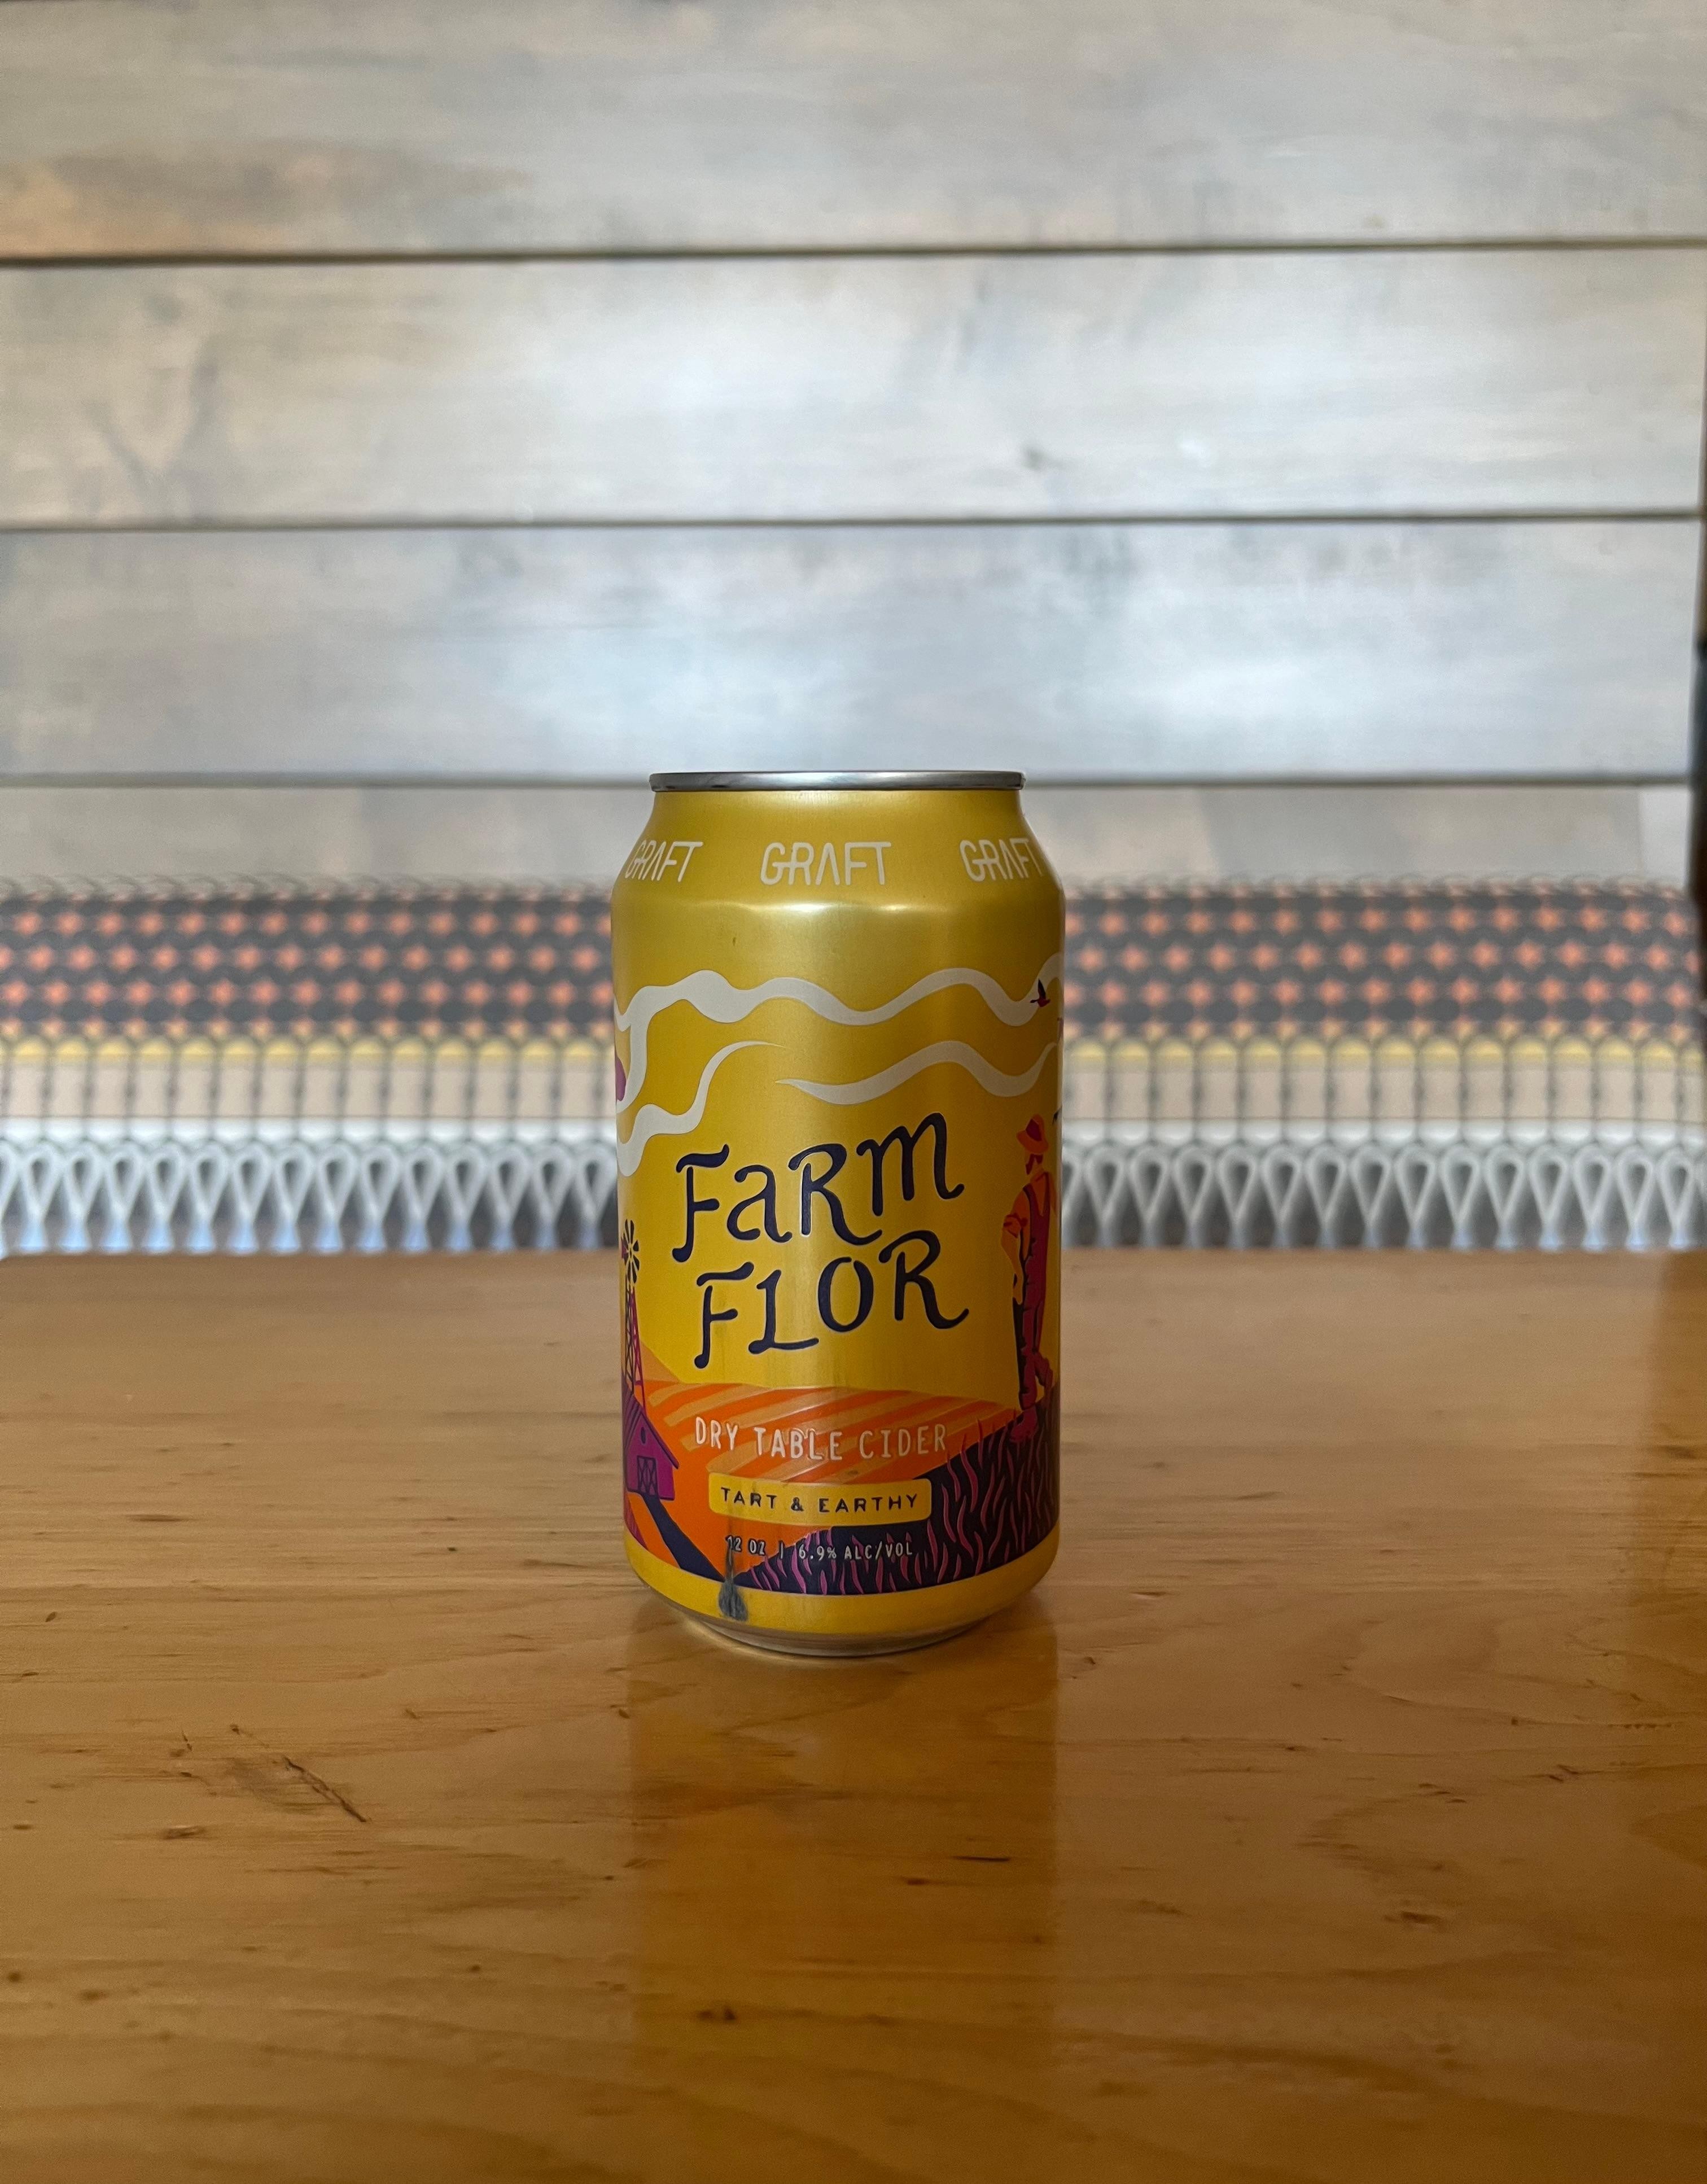 Graft Farm Flor Cider